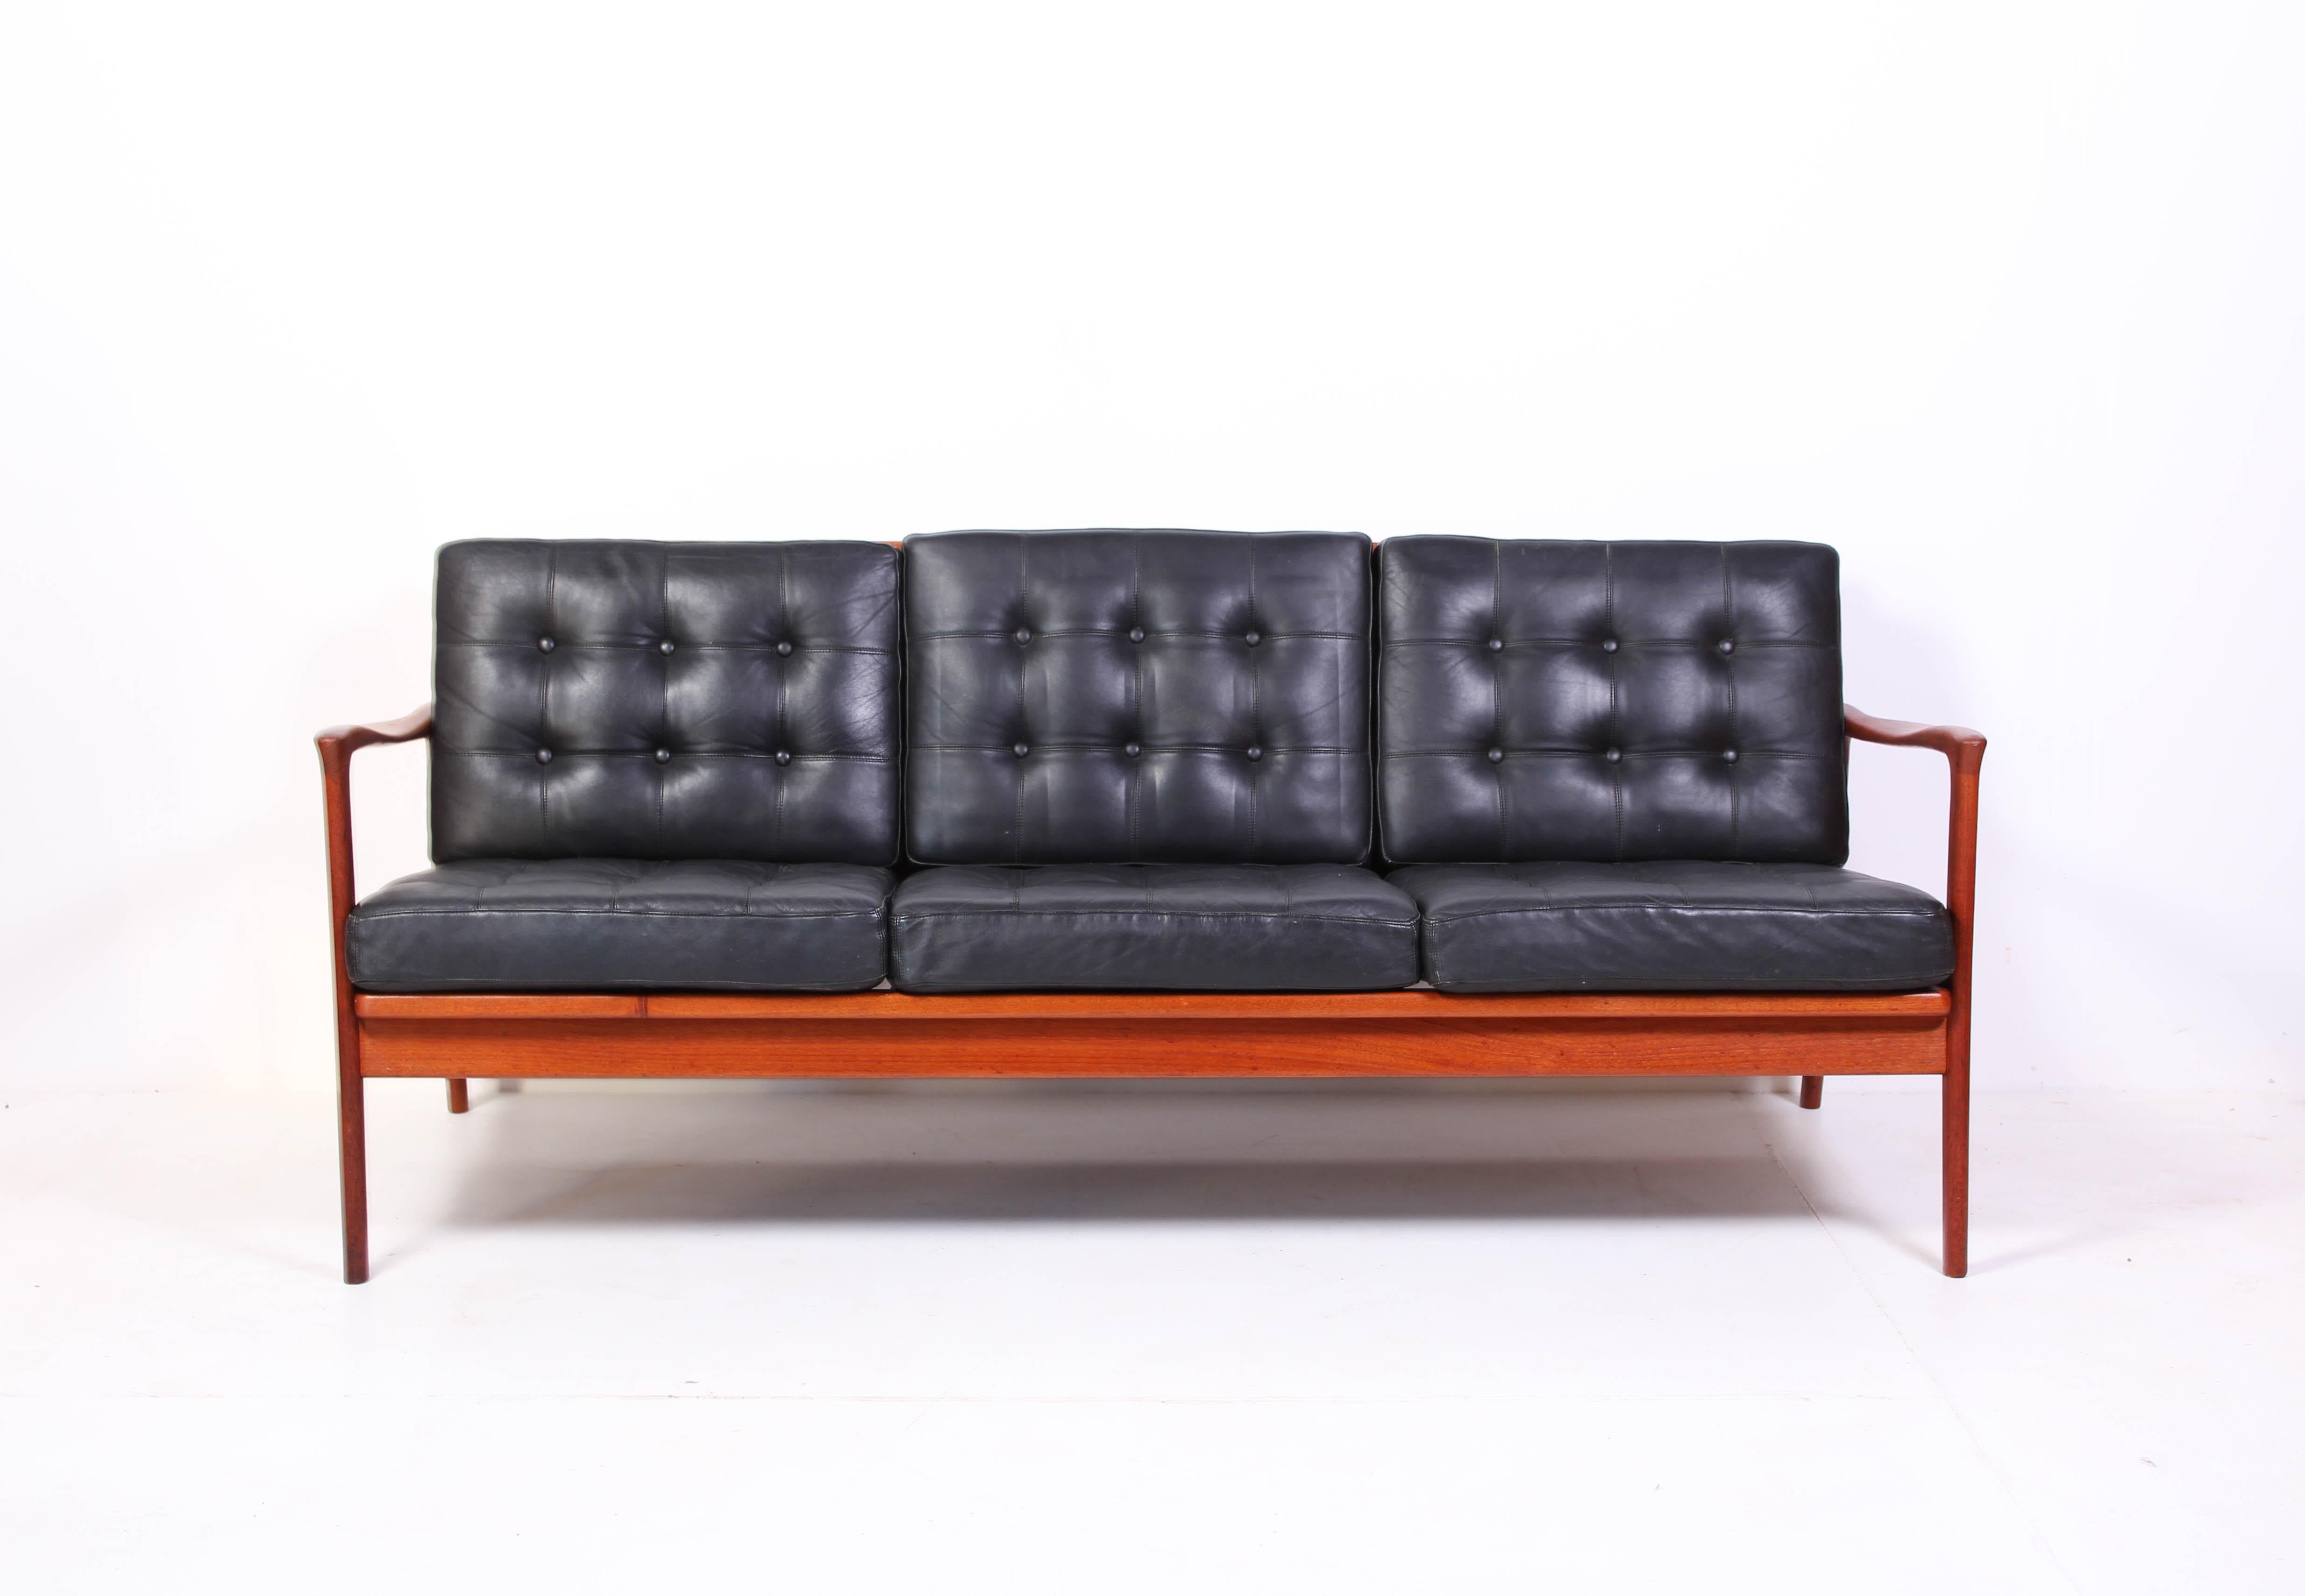 Midcentury teak and black leather sofa by Swedish designer Carl-Erik Johansson. The model is called 